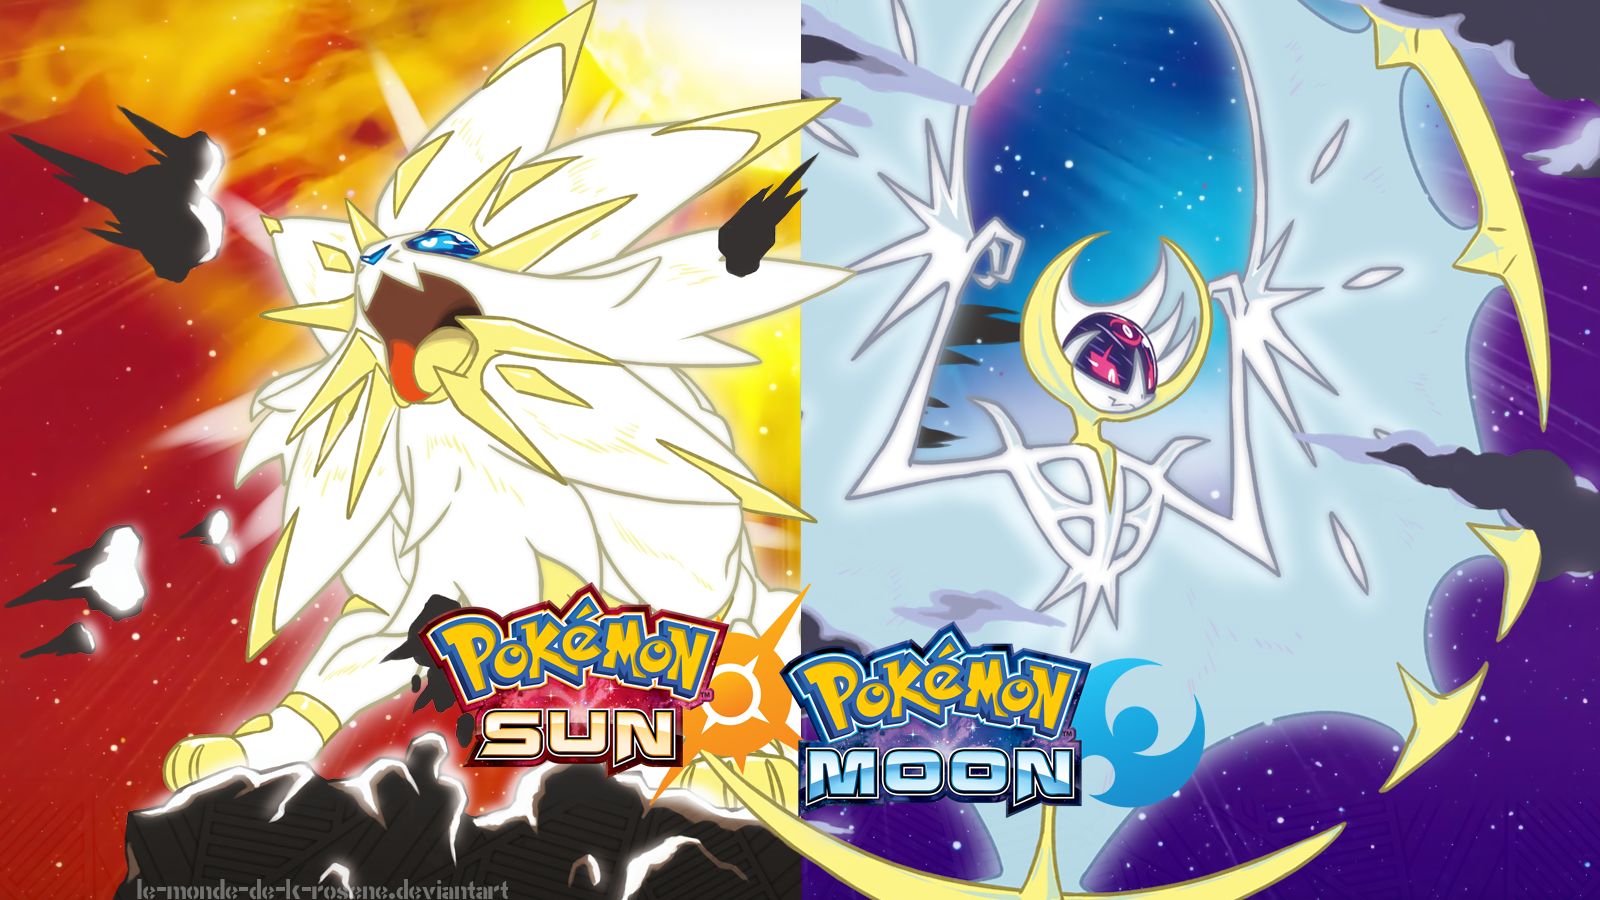 pokémon: sun and moon, video game, lunala (pokémon), pokémon moon, pokémon sun and moon, pokémon sun, pokémon, solgaleo (pokémon)